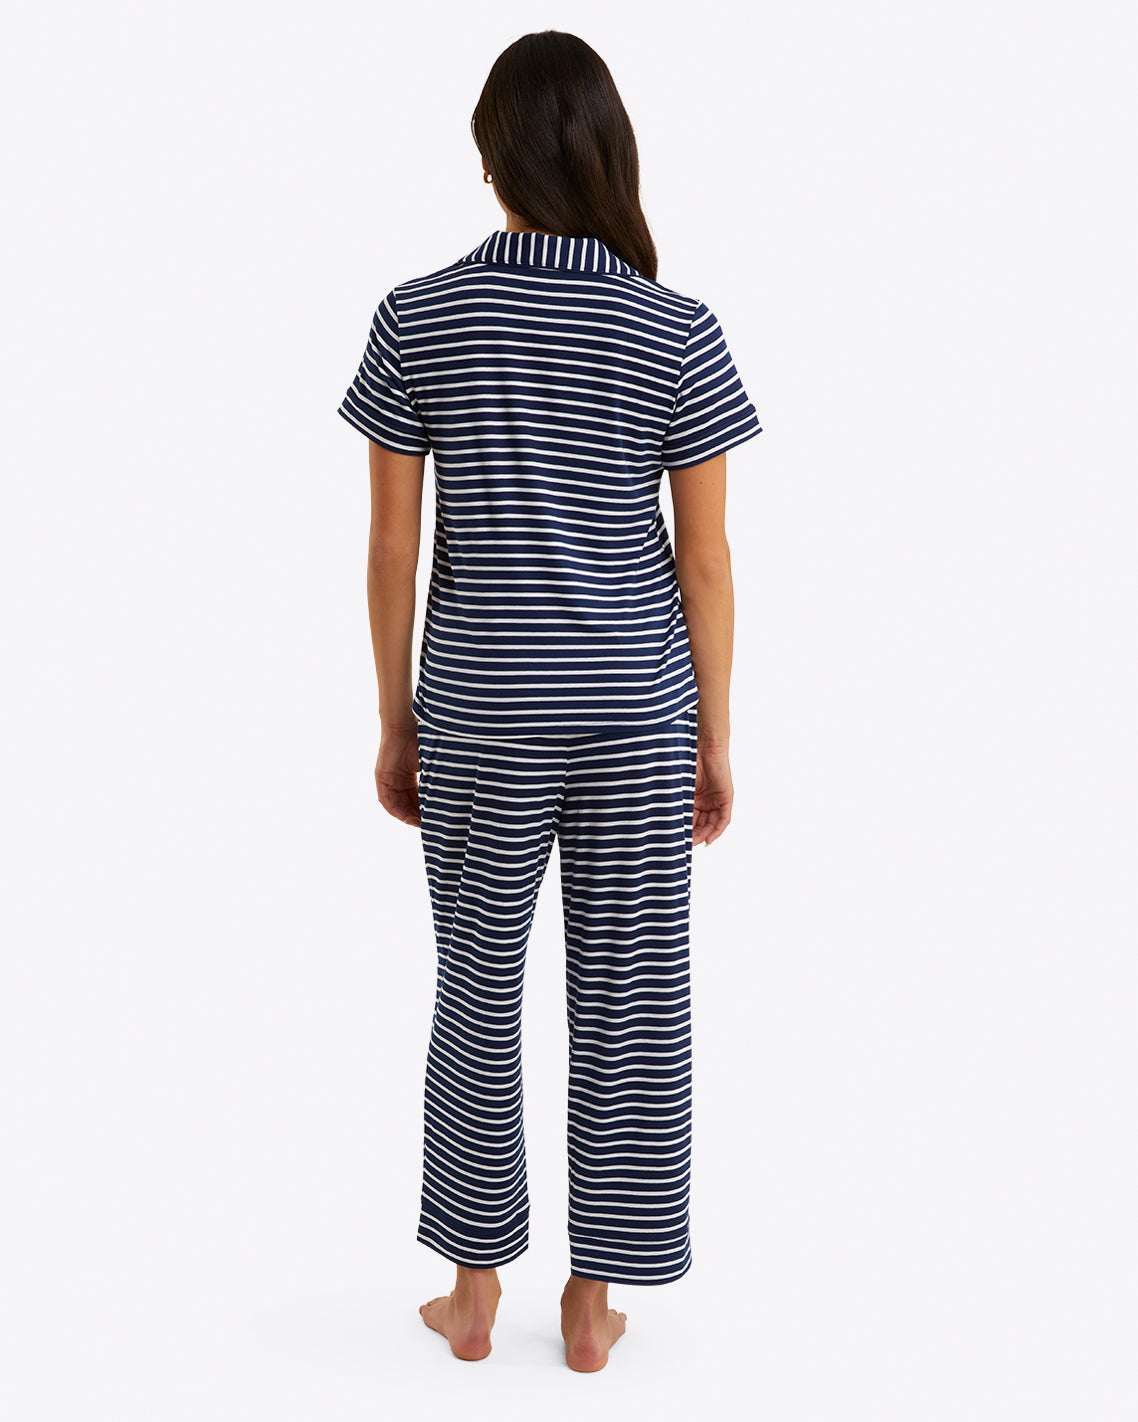 Linda Pajama Set in Nautical Stripe